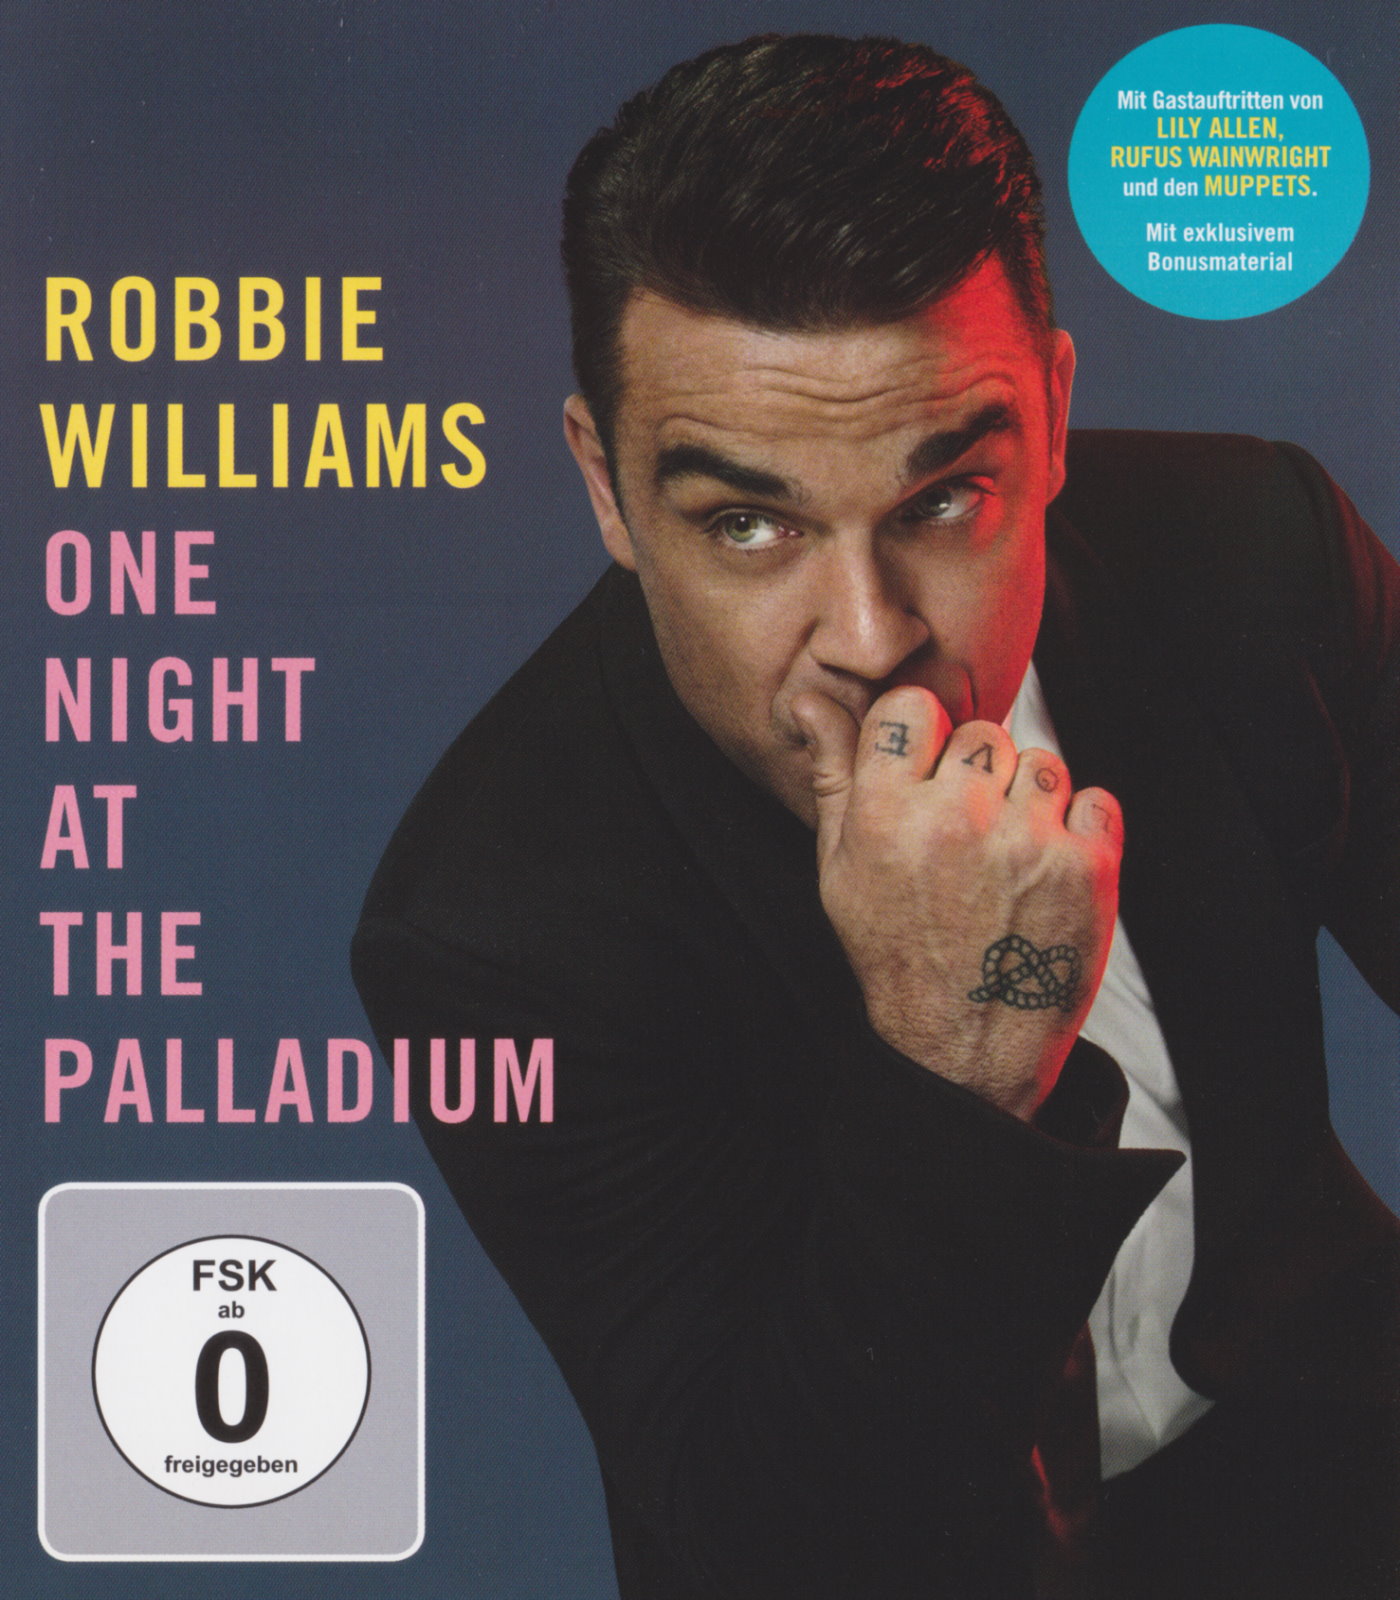 Cover - Robbie Williams - One Night At The Palladium.jpg